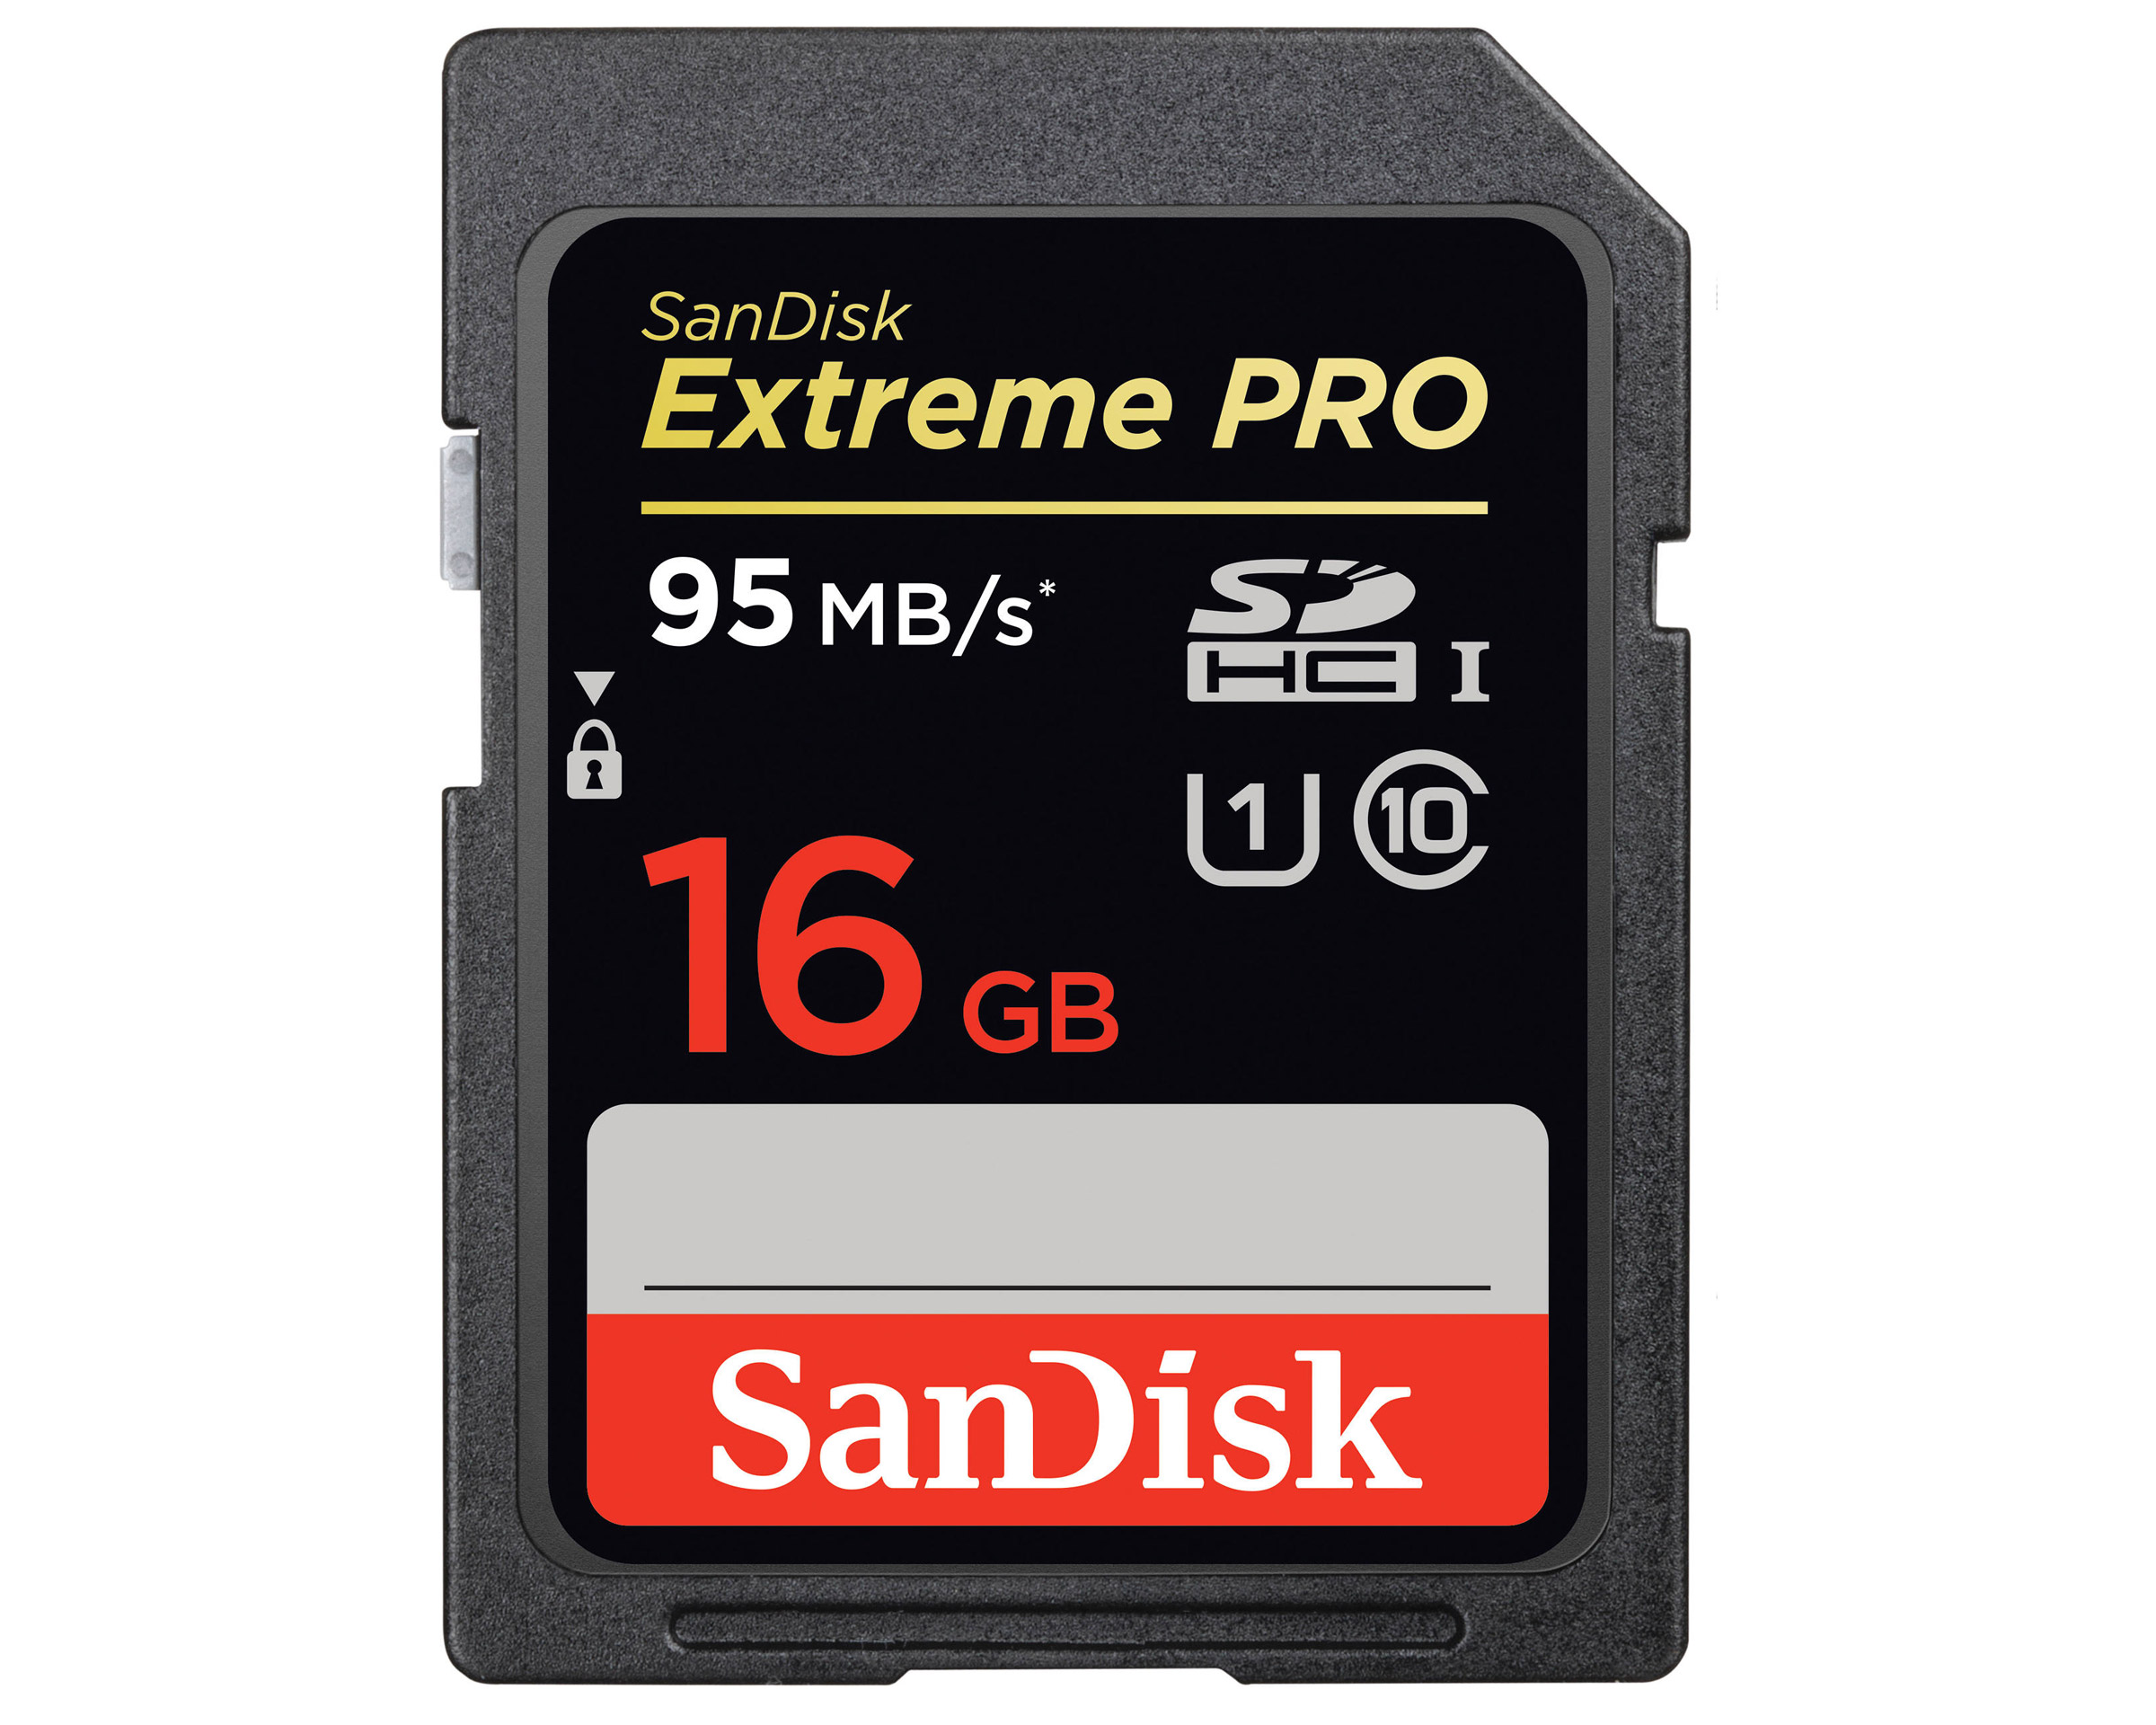 Sandisk Extreme Pro SDHC 16 GB (95 MB/s)